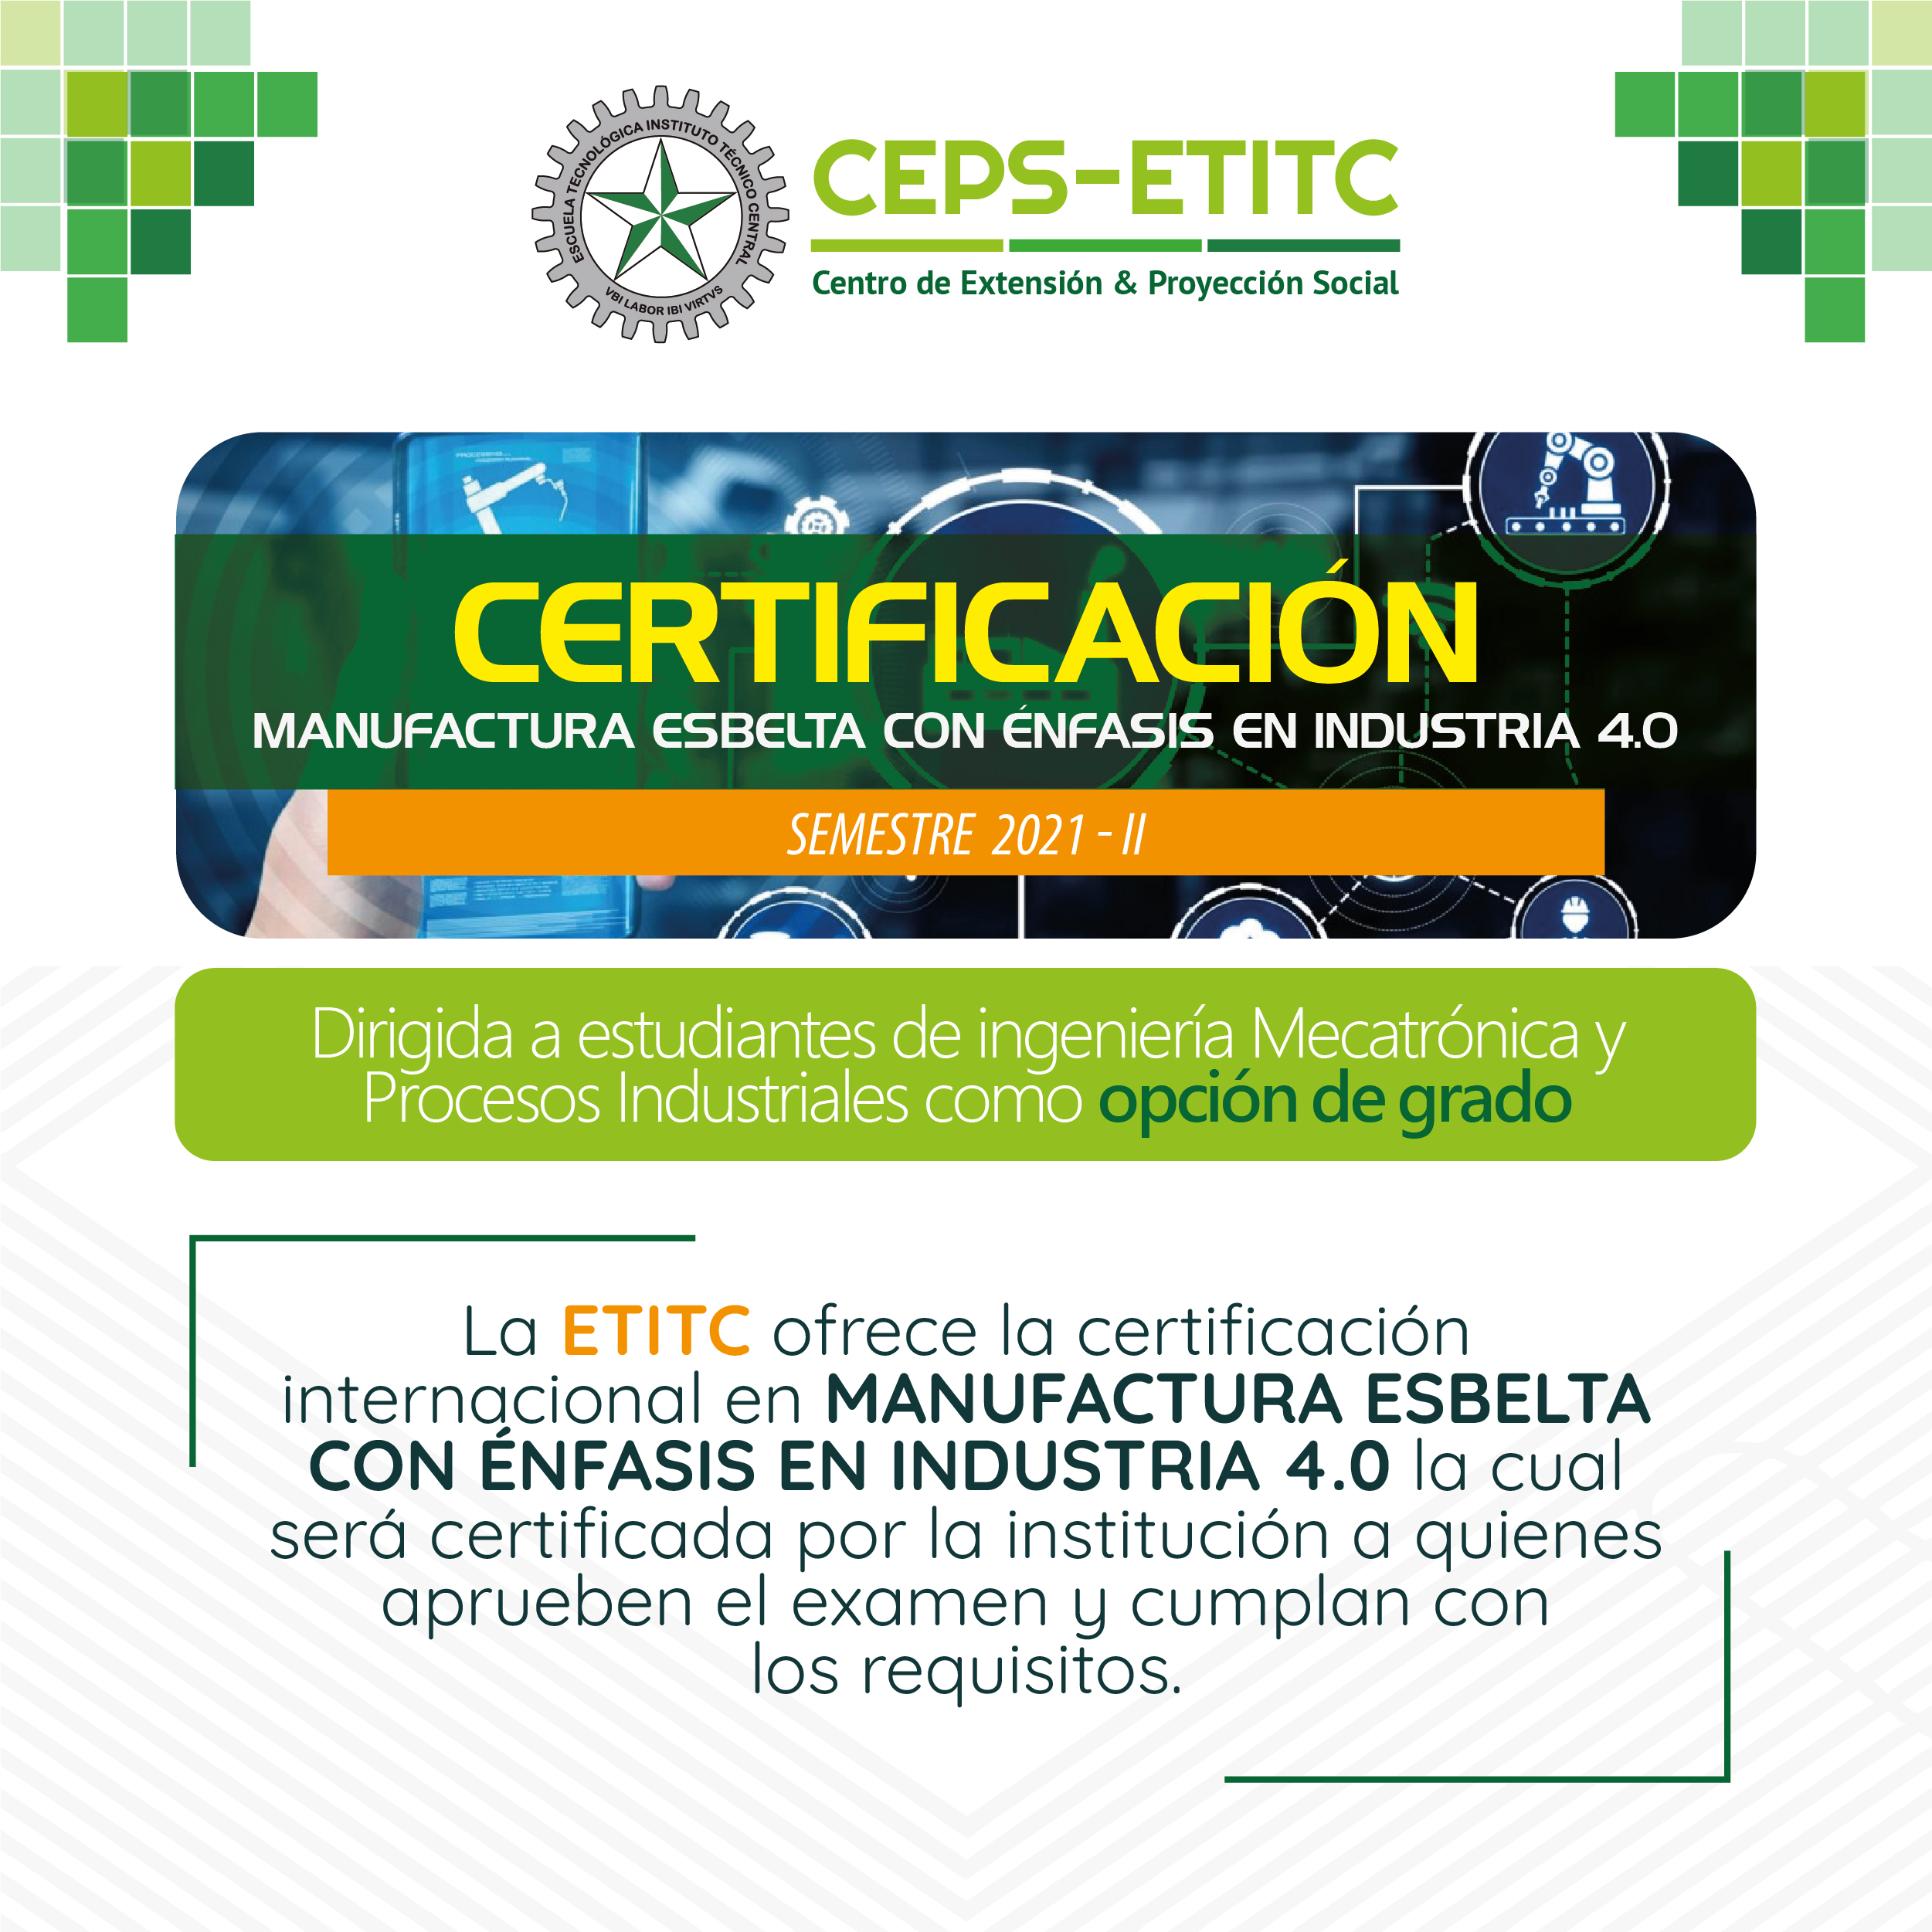 Certificación en Manufactura Esbelta